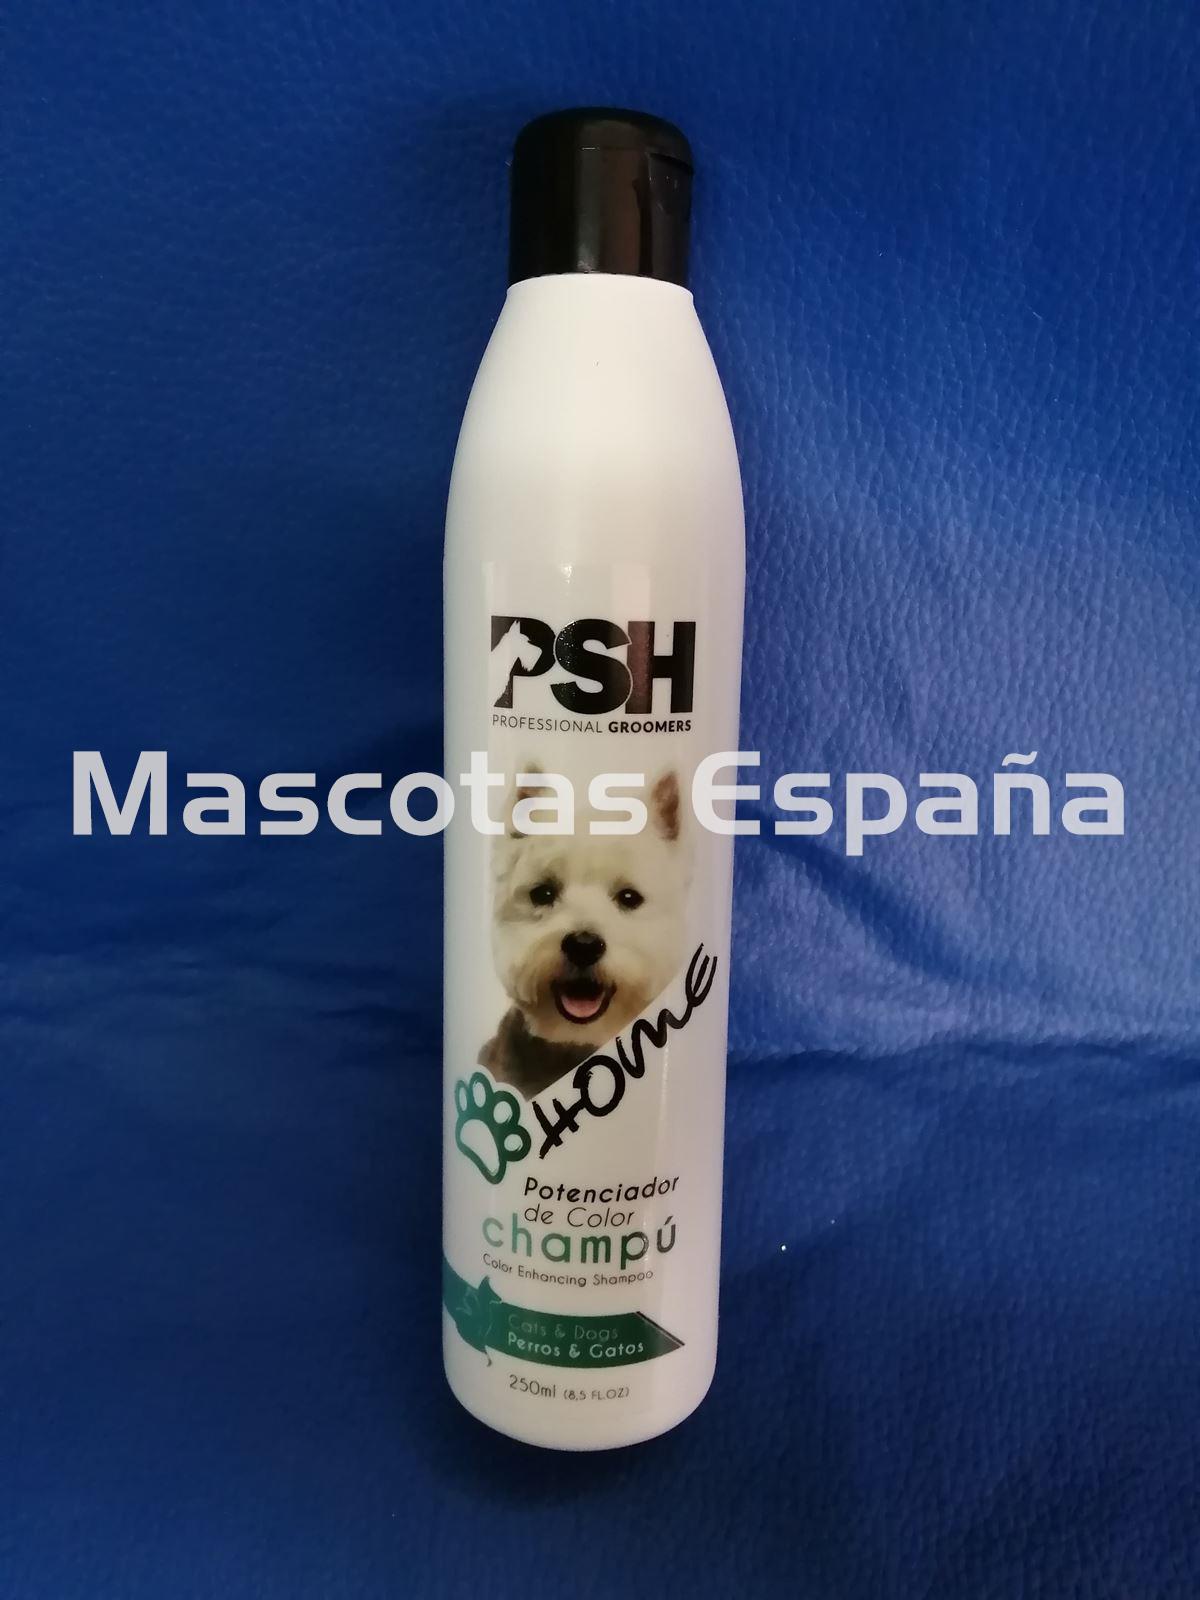 PSH HOME Potenciador de Color Champú (Color Enhancing Shampoo) 250ml - Imagen 1